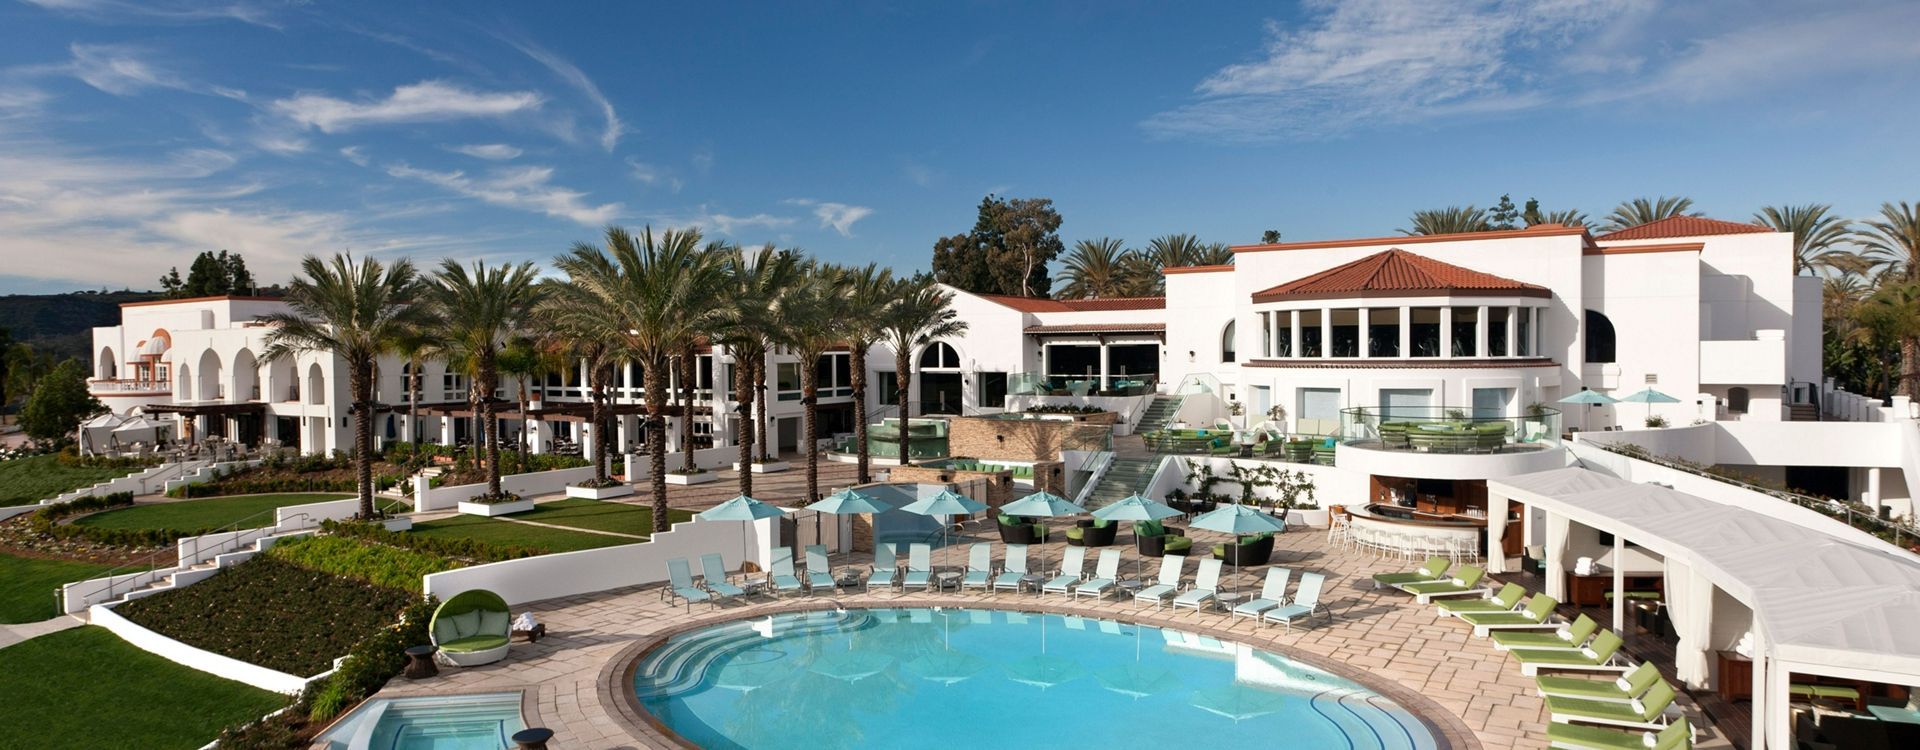 Omni La Costa Resort  Spa.jpeg